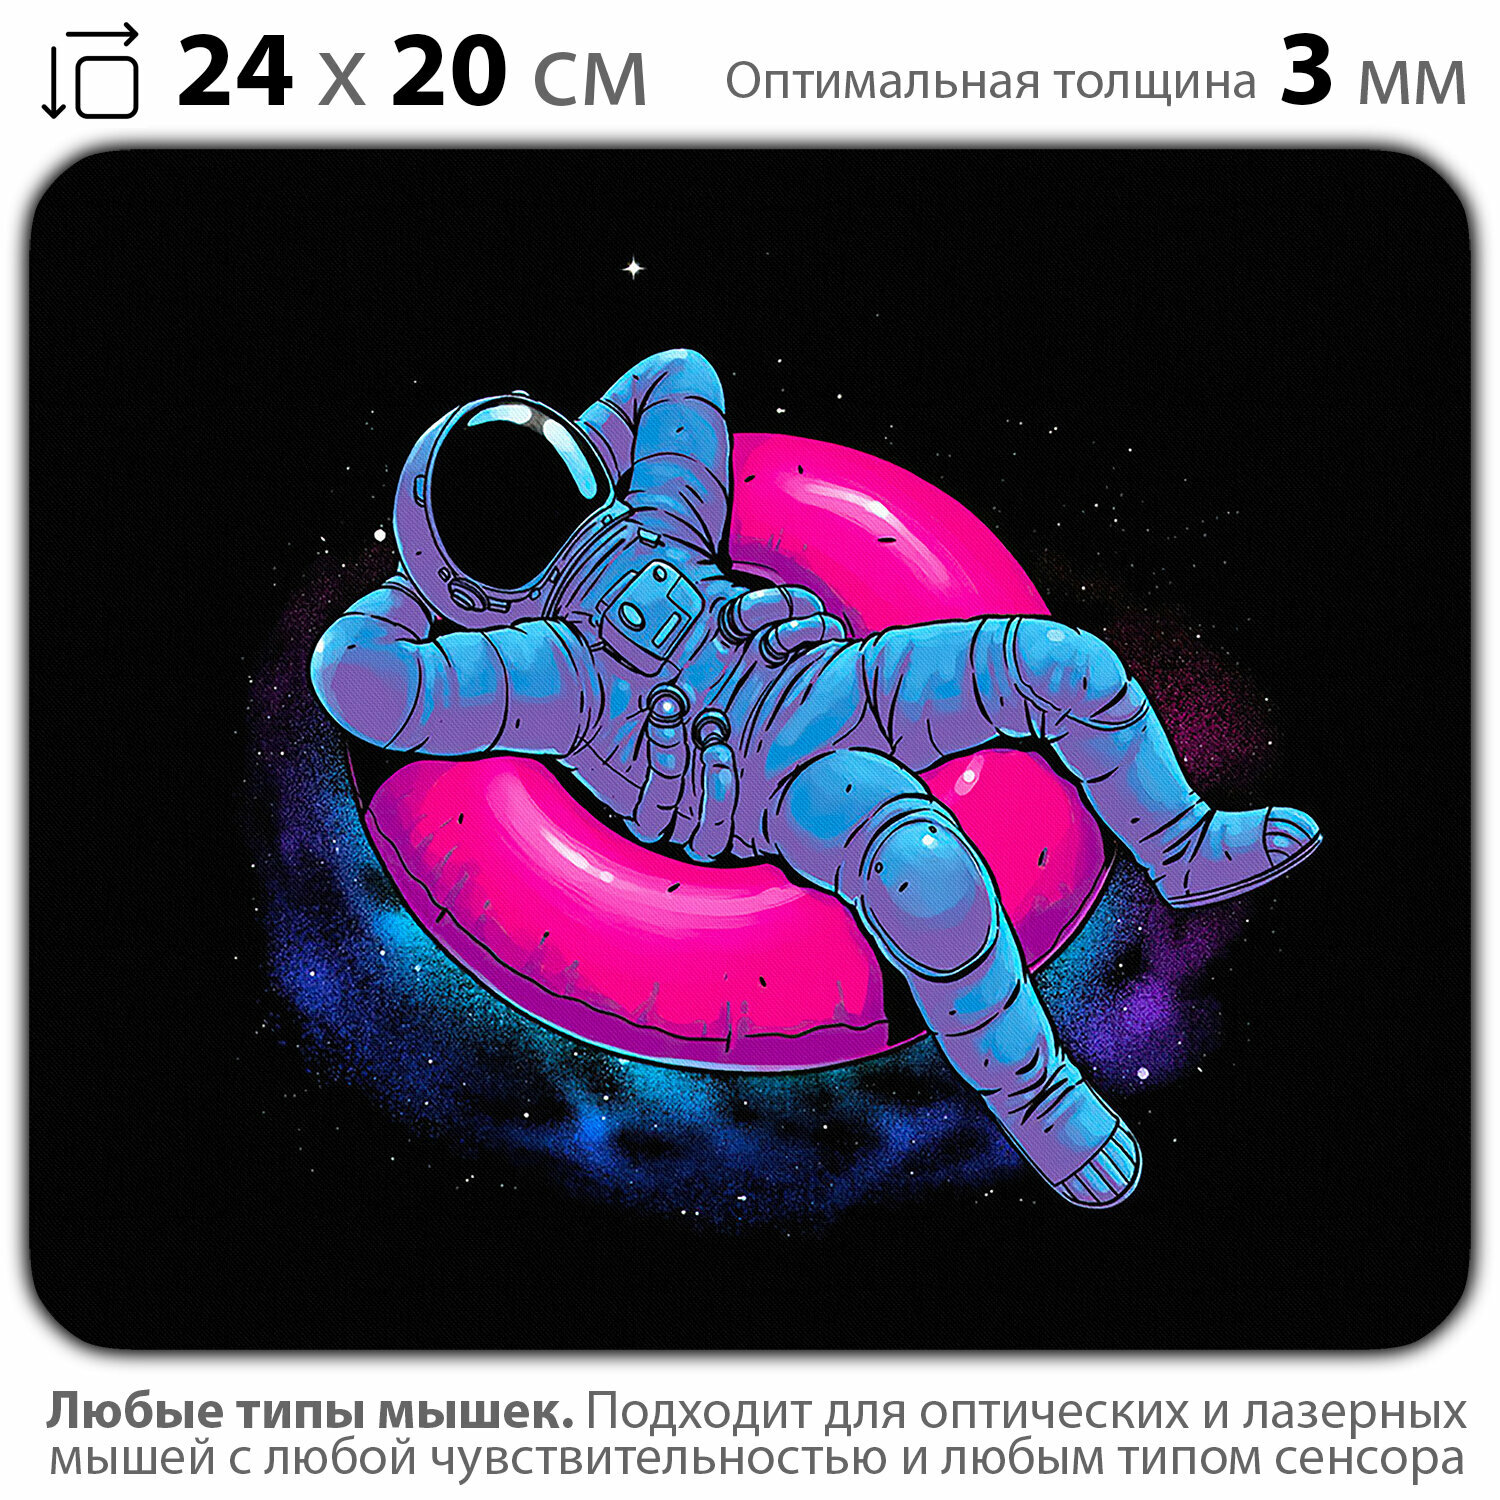 Коврик для мыши "Космонавт на бублике" (24 x 20 см x 3 мм)